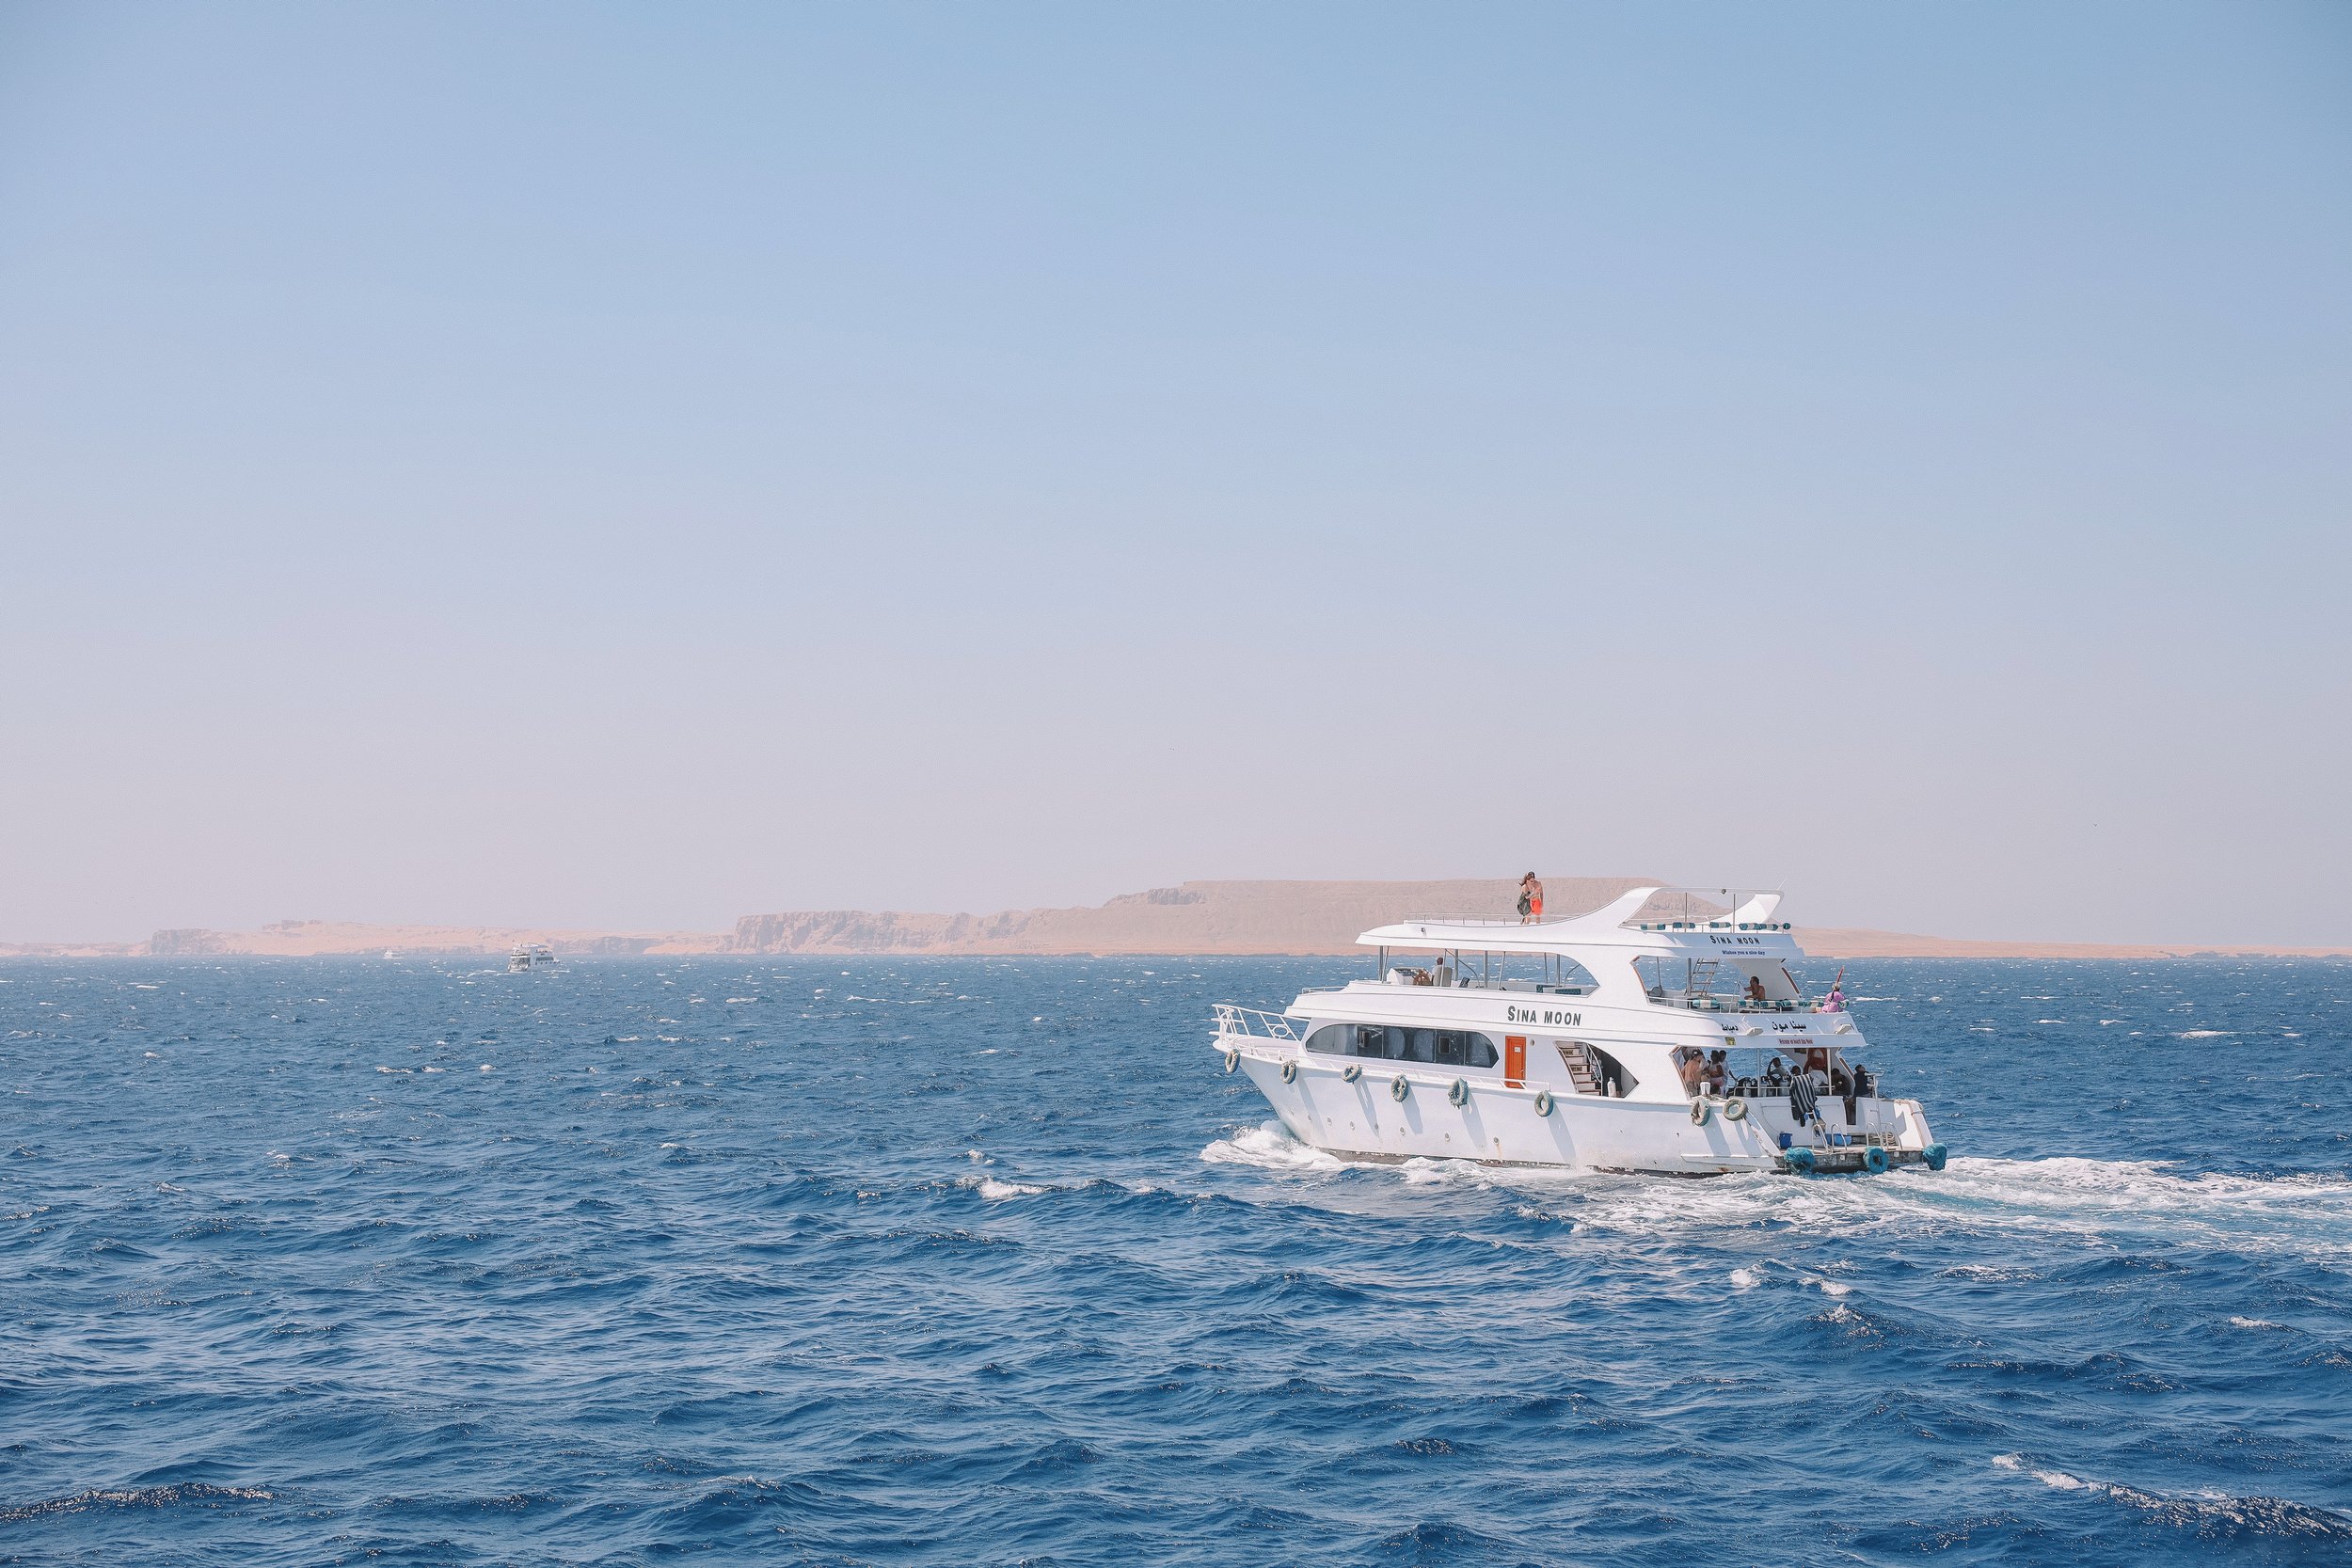 Racing against other boats - Ras Mohammed National Park - White Island - Sharm El-Sheikh - Sinai Peninsula - Egypt